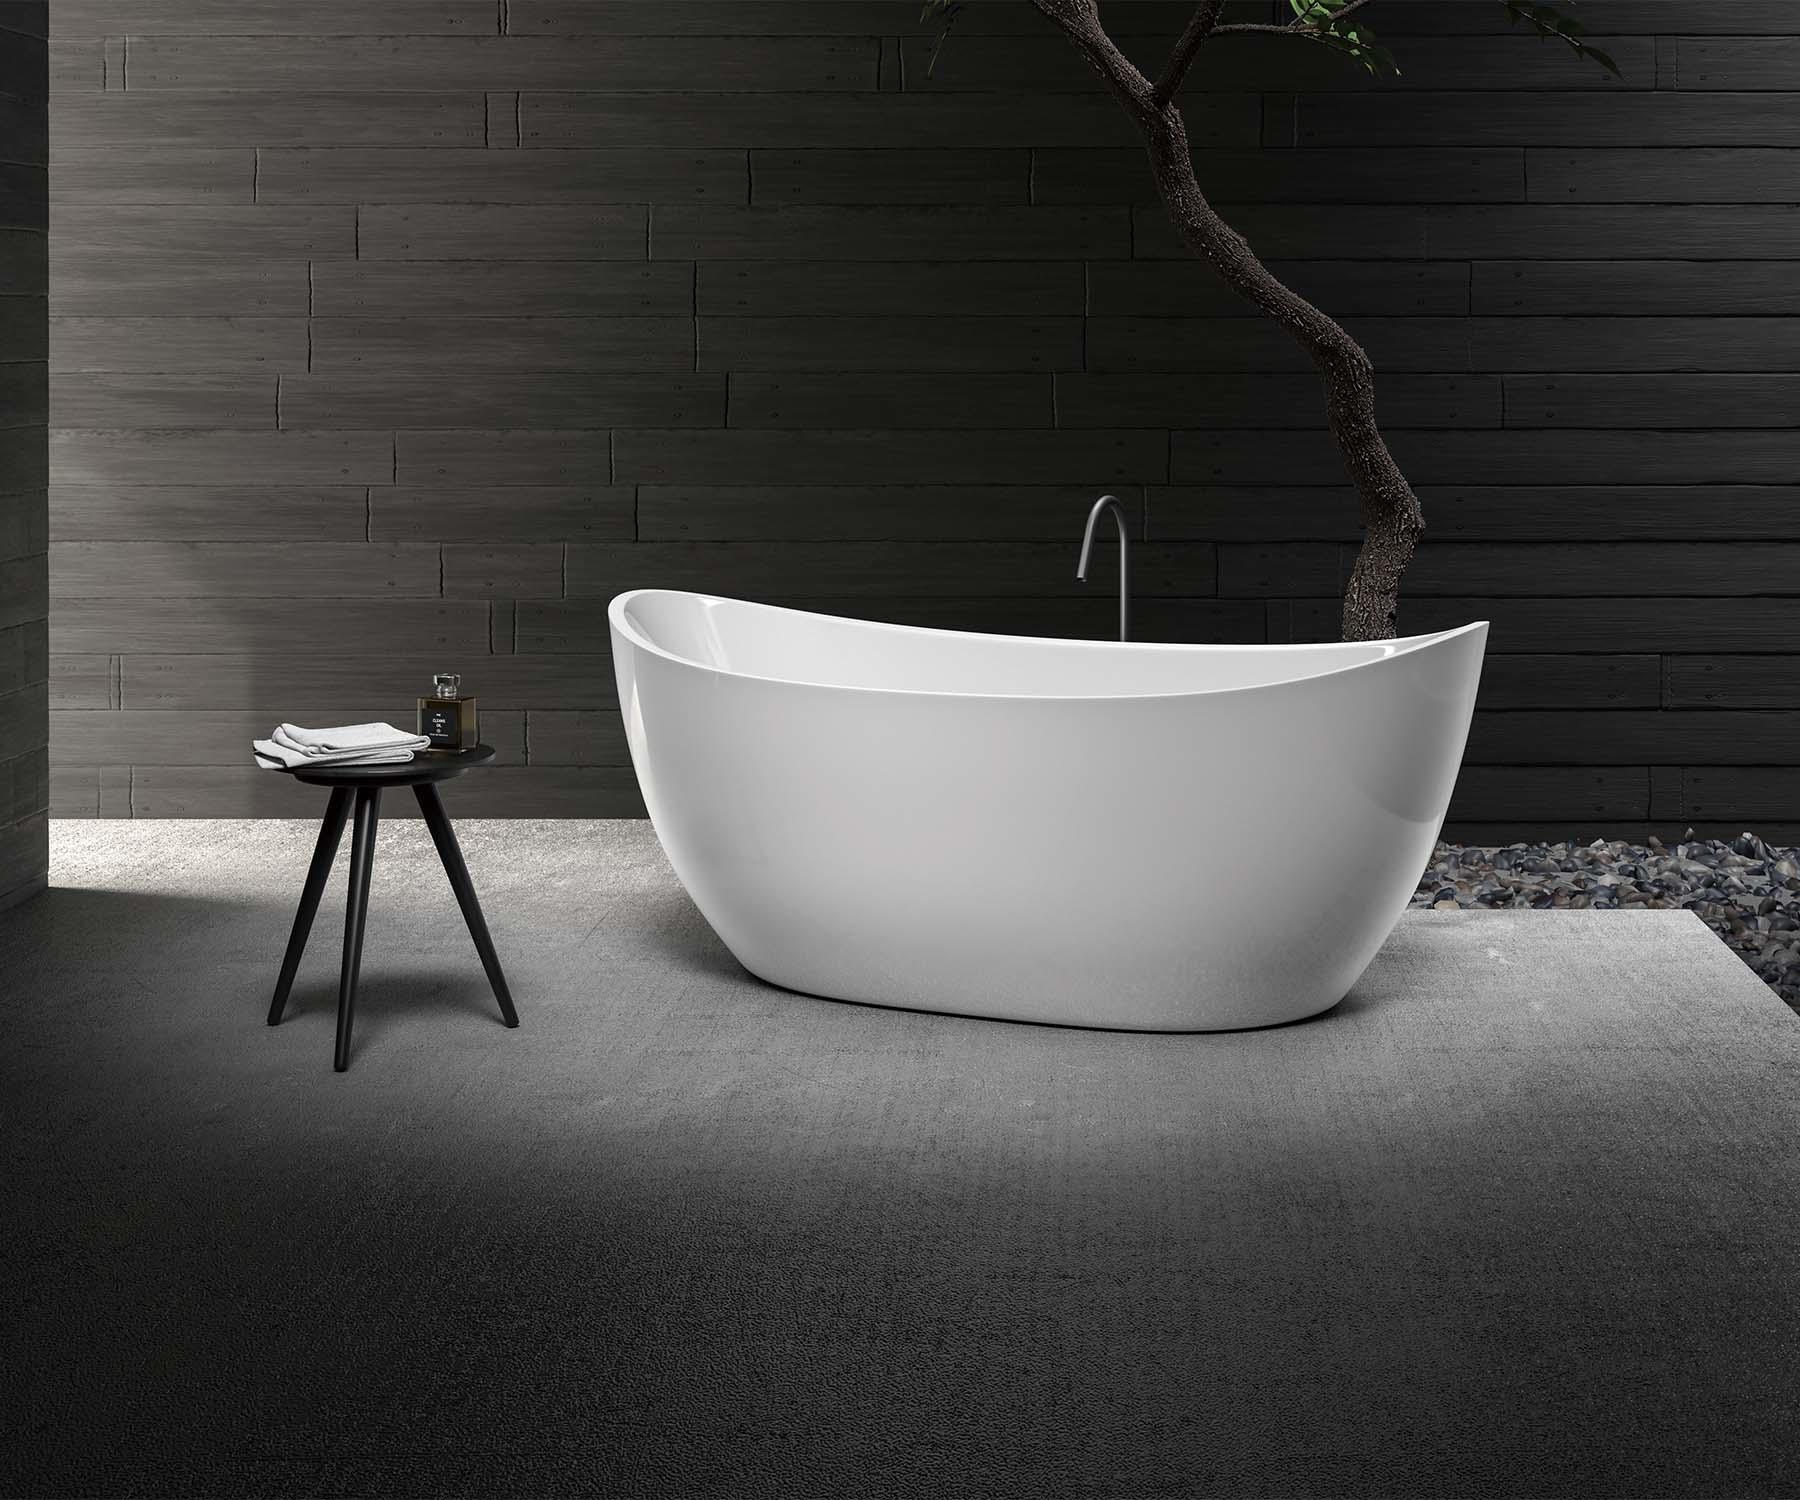 319 Small apartment household tub Nordic simple goose egg type acrylic bathtub